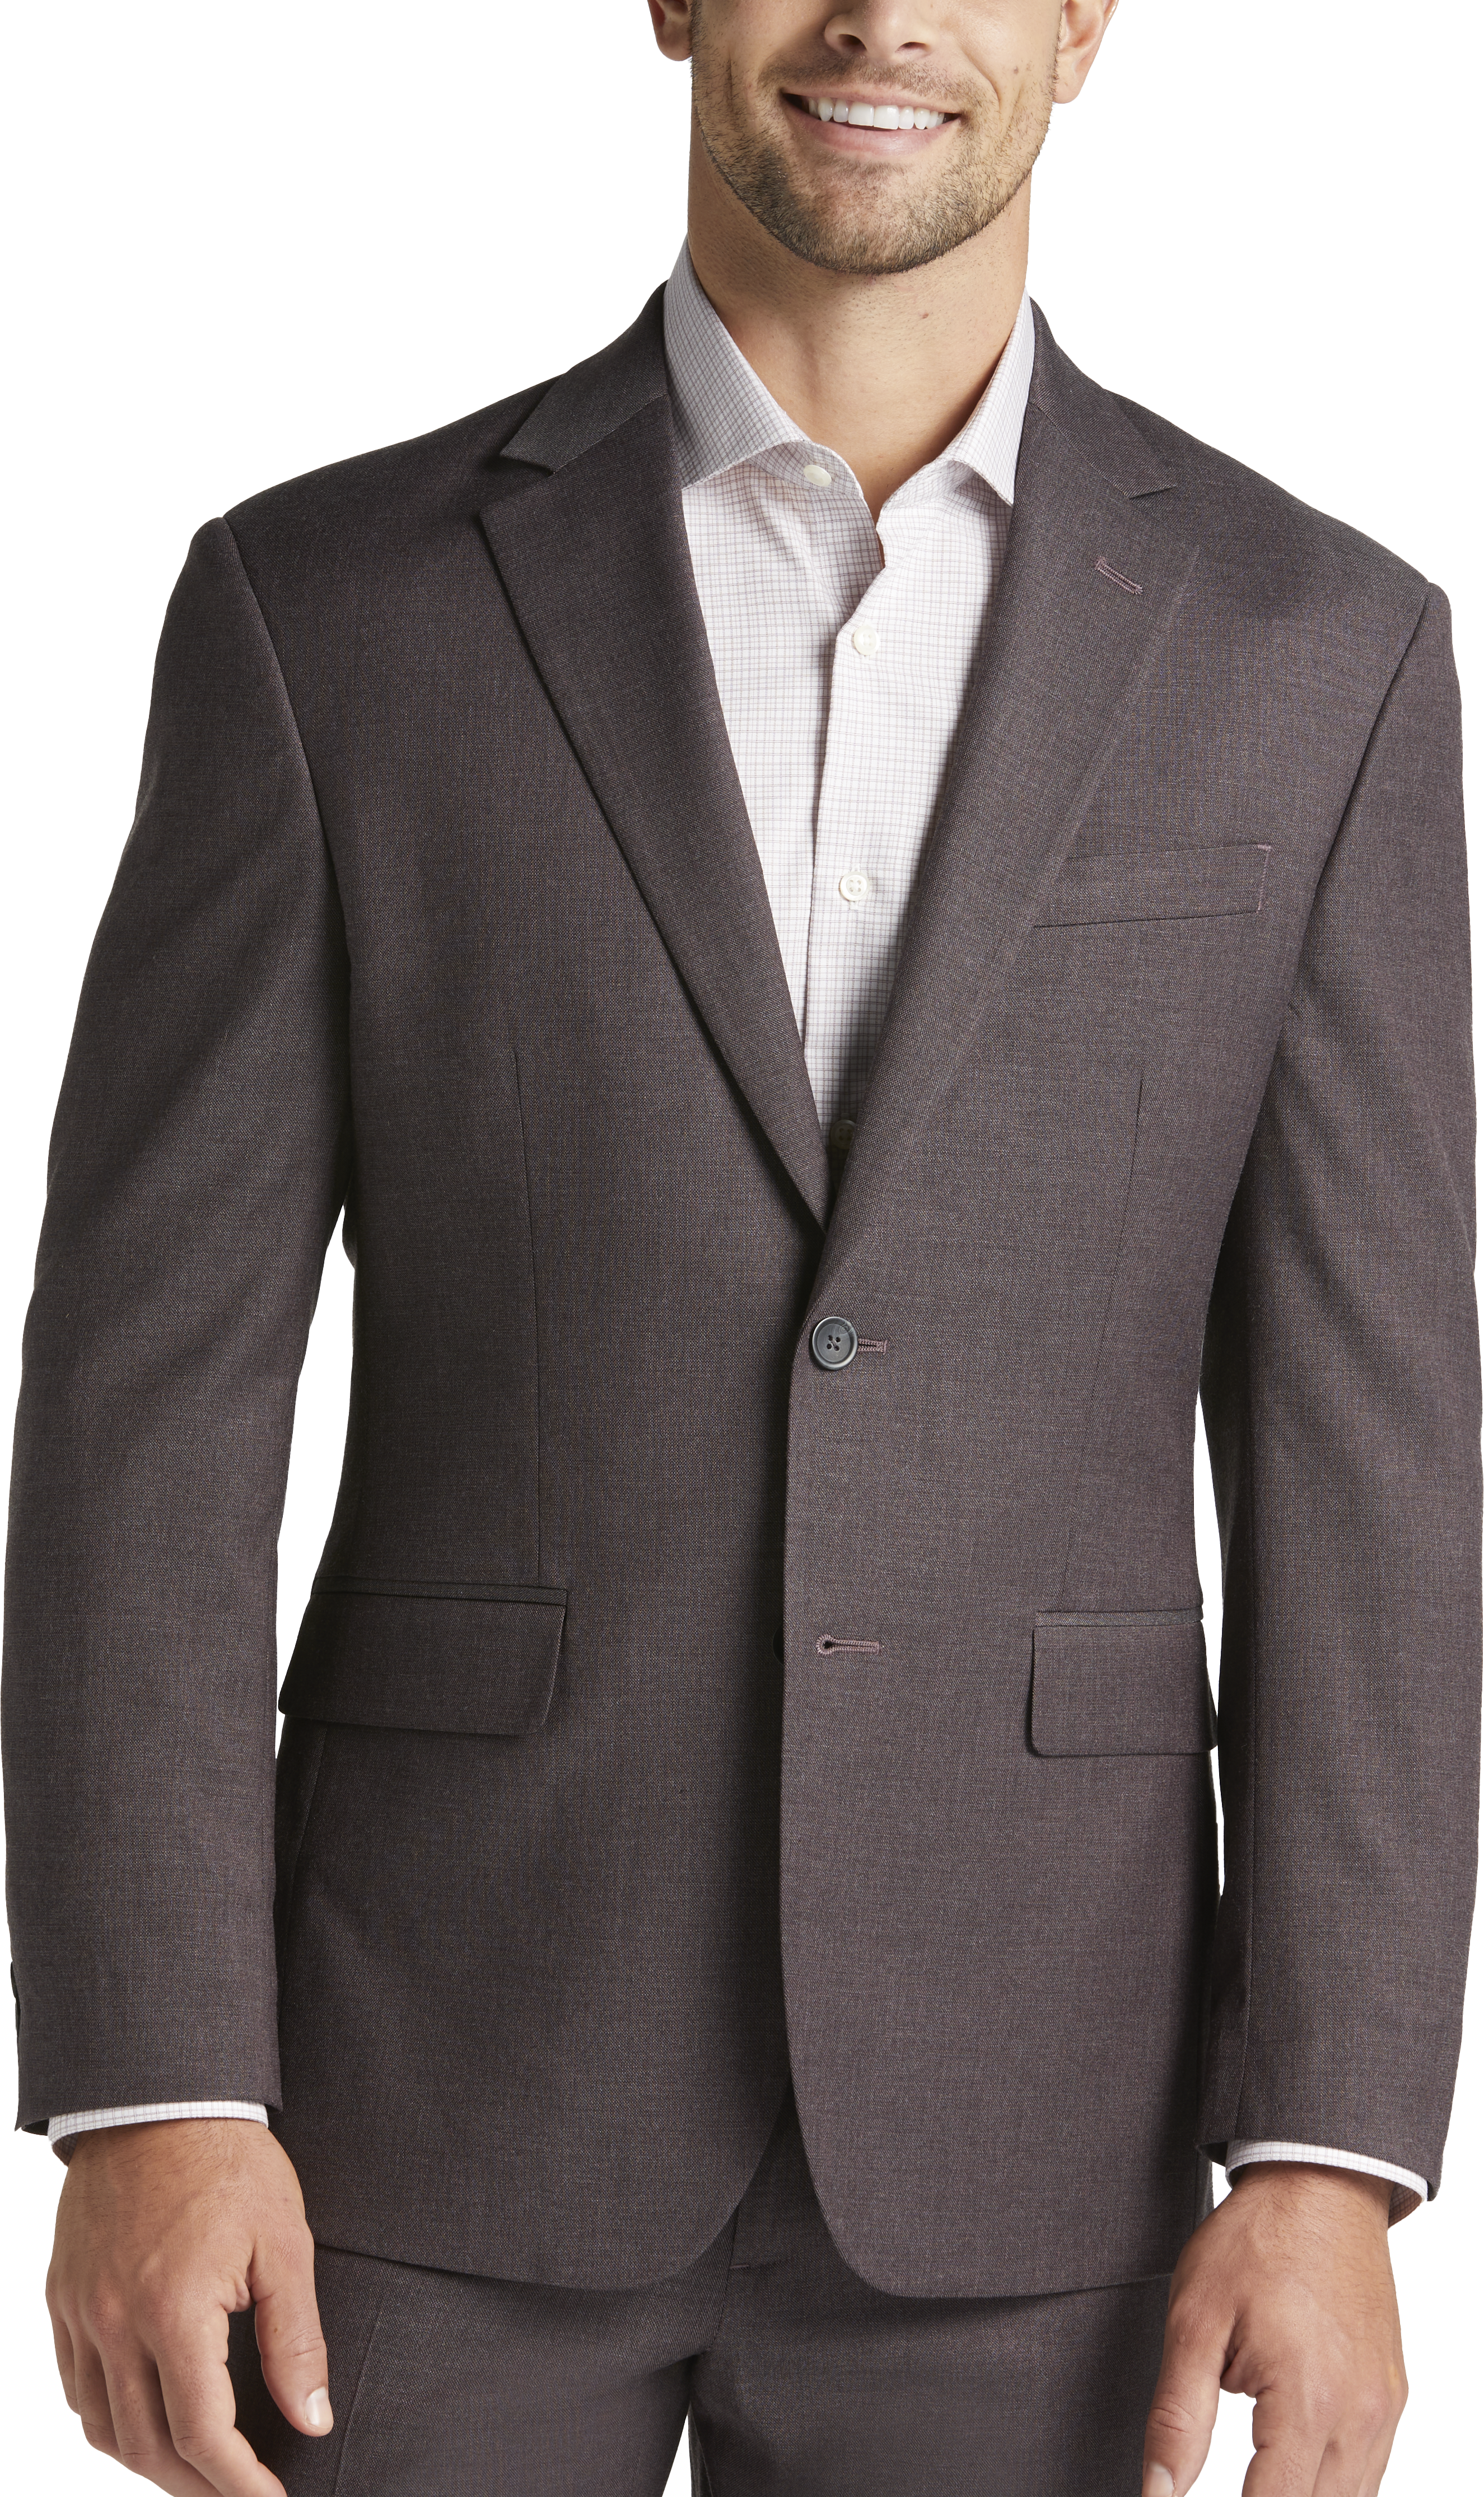 Modern Fit Suit Separates Jacket